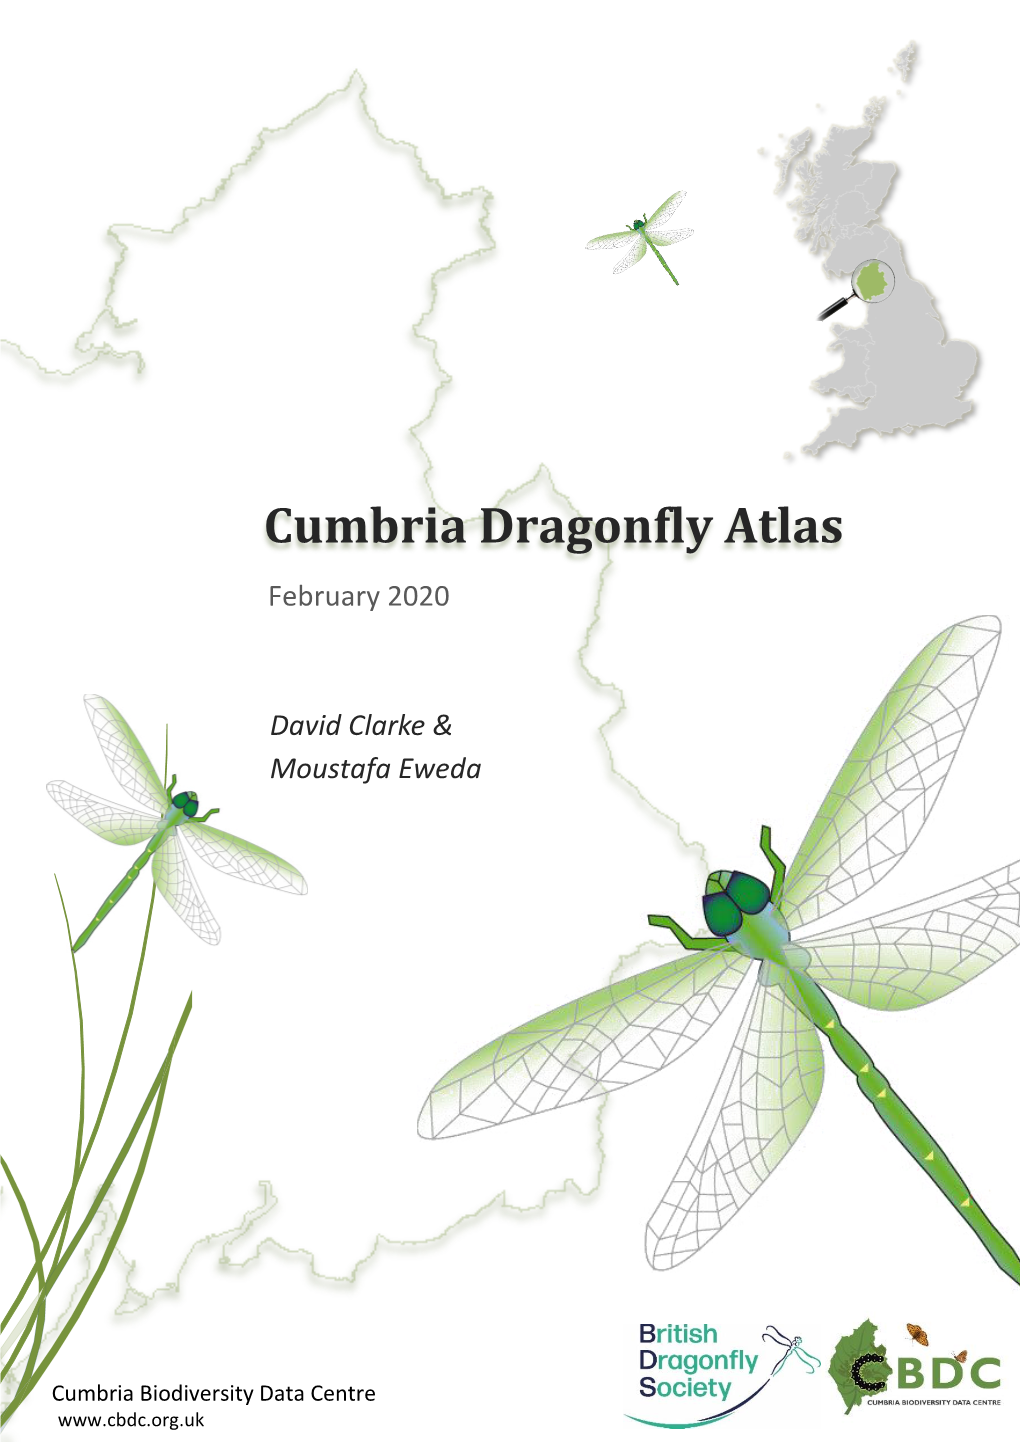 Cumbria Dragonfly Atlas February 2020